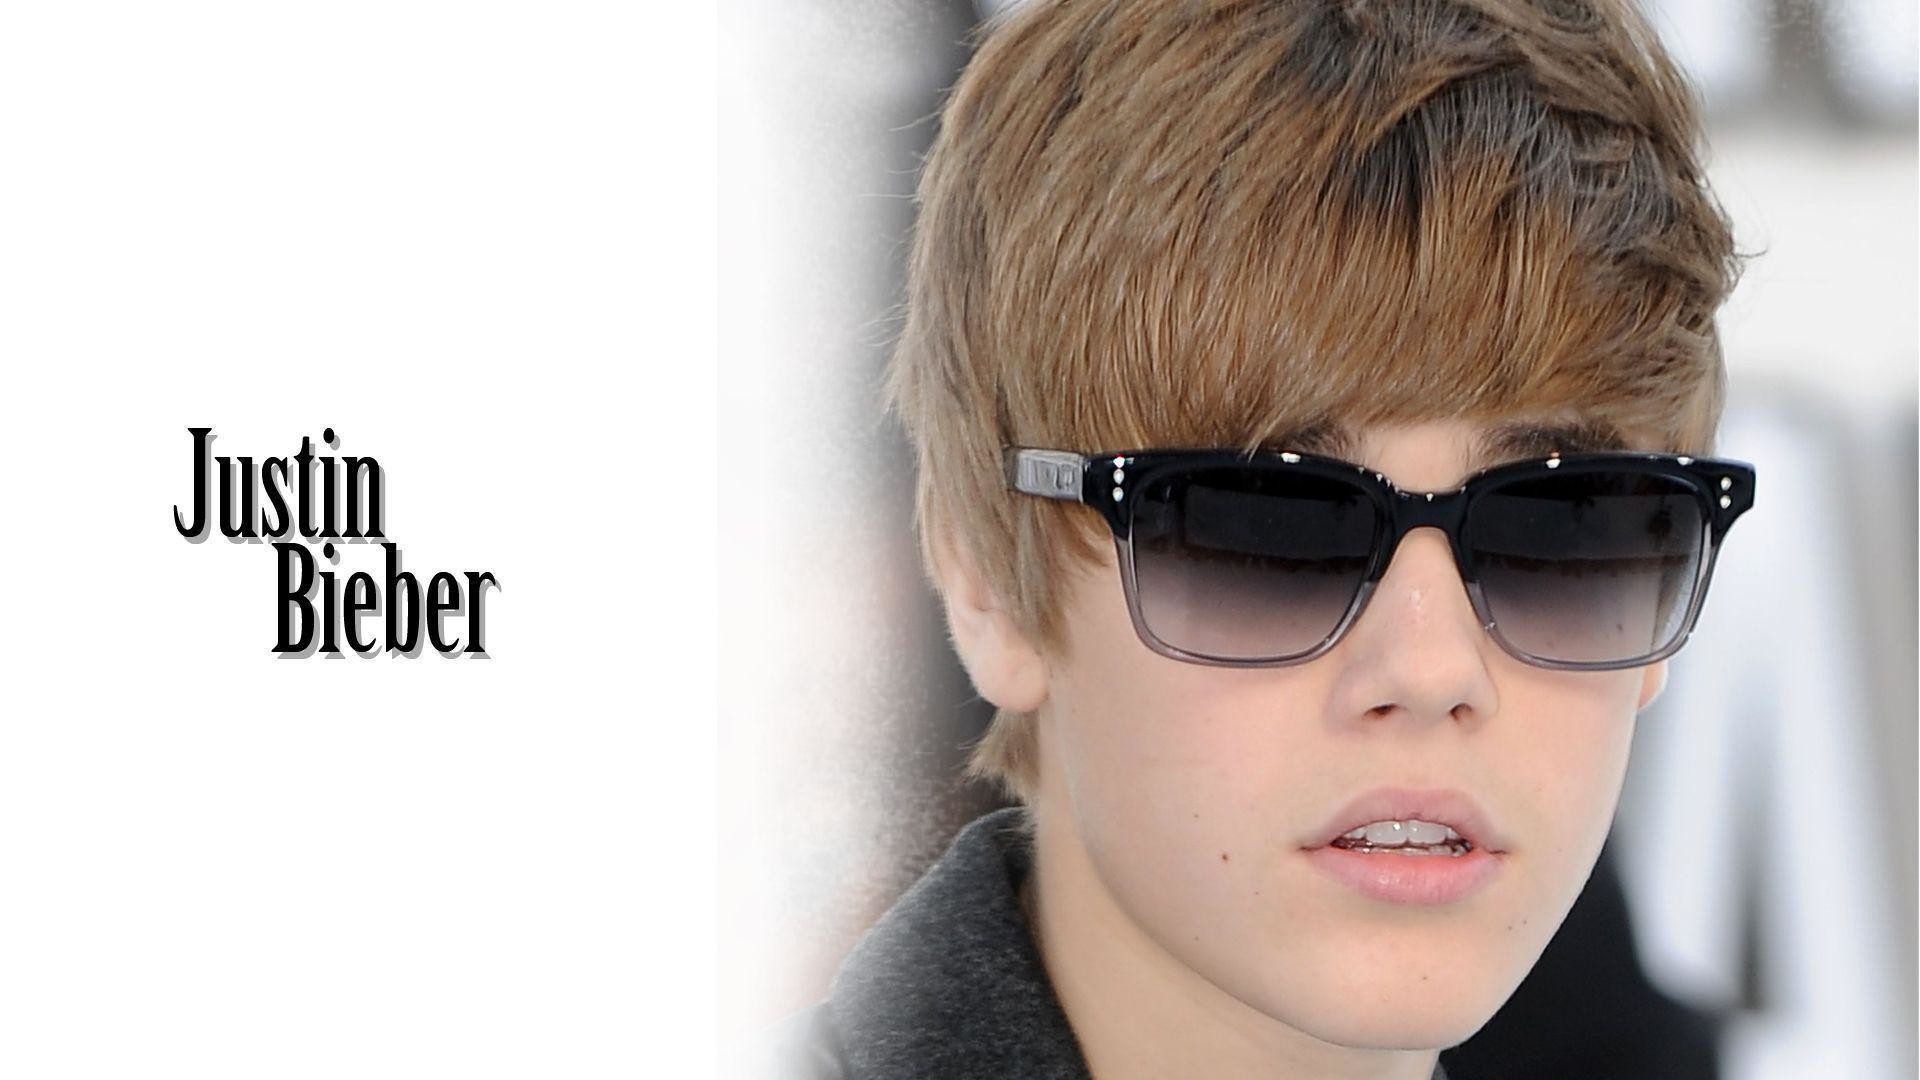 Justin Bieber New Wallpaper Image